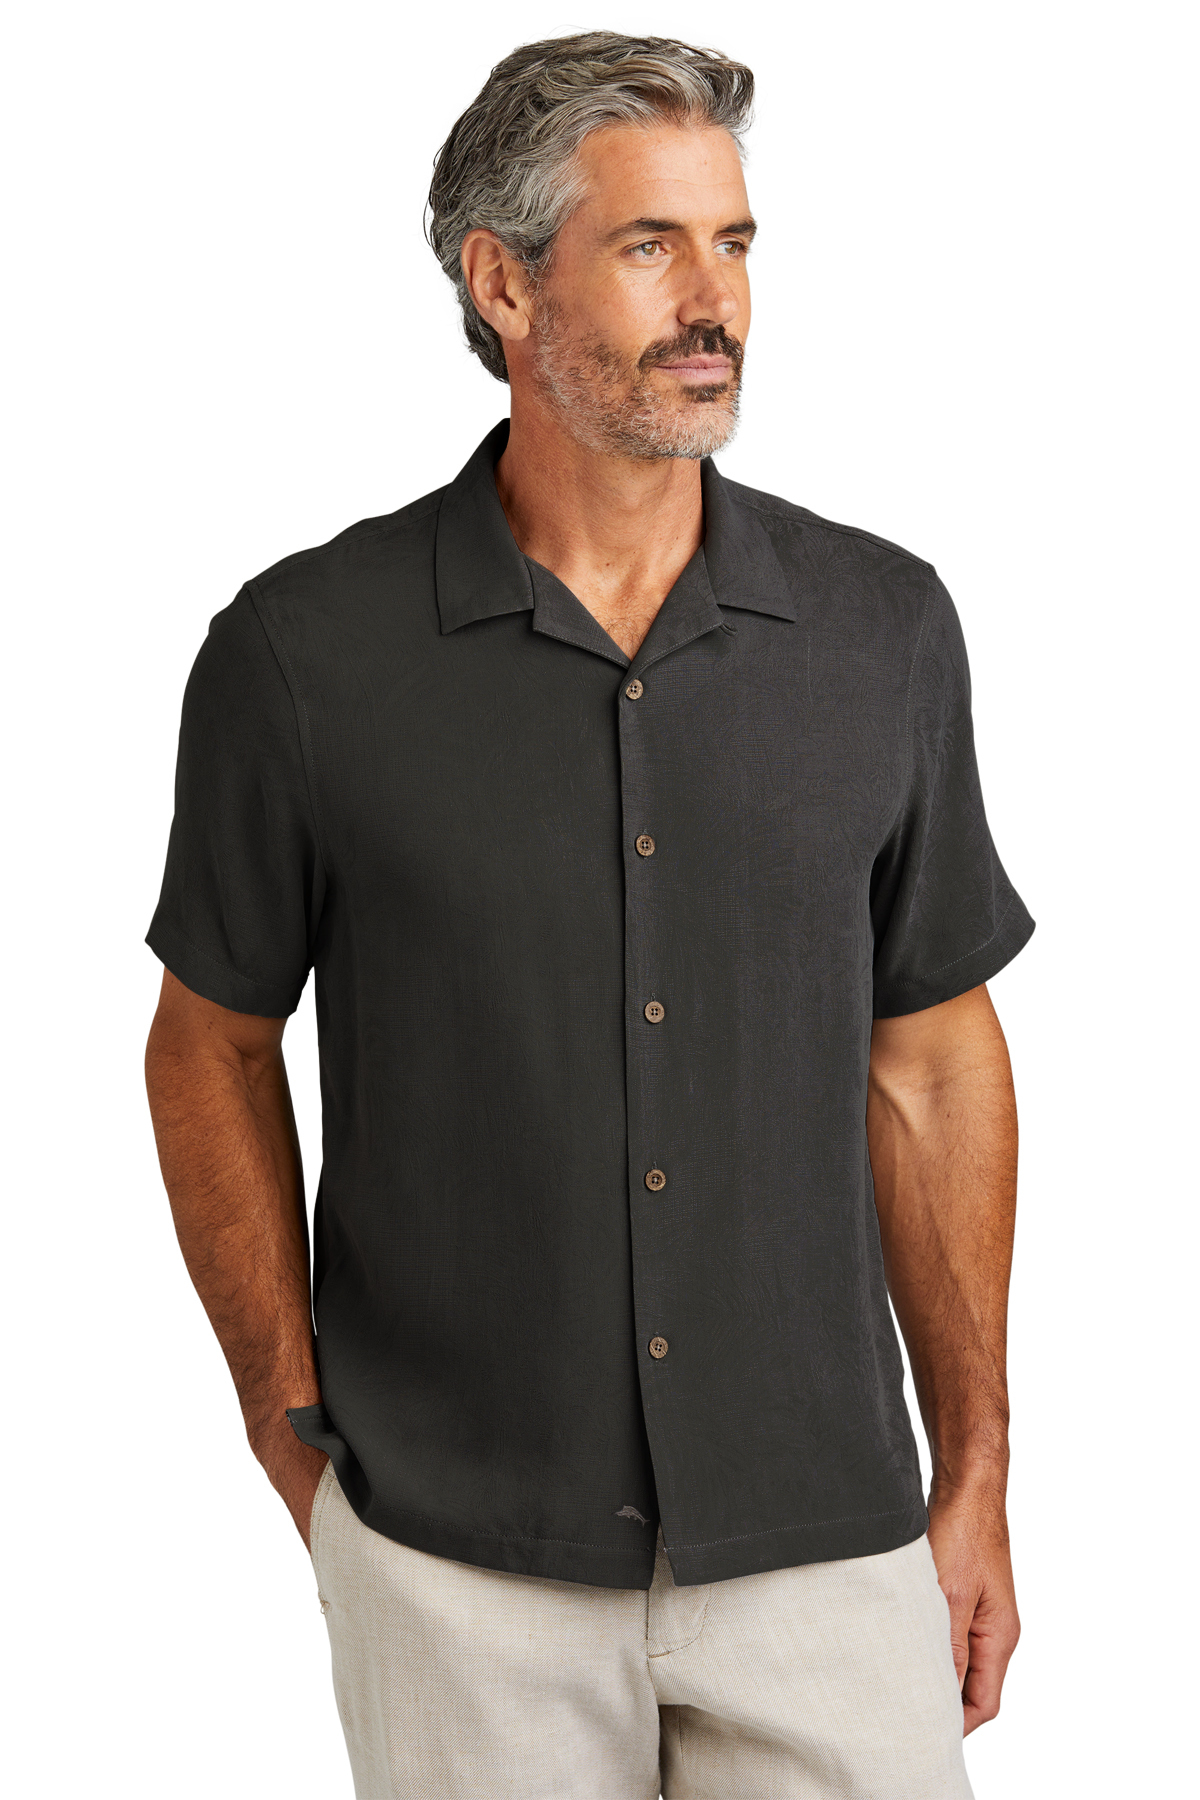 Tommy Bahama Tropic Isles Short Sleeve Shirt | Product | SanMar